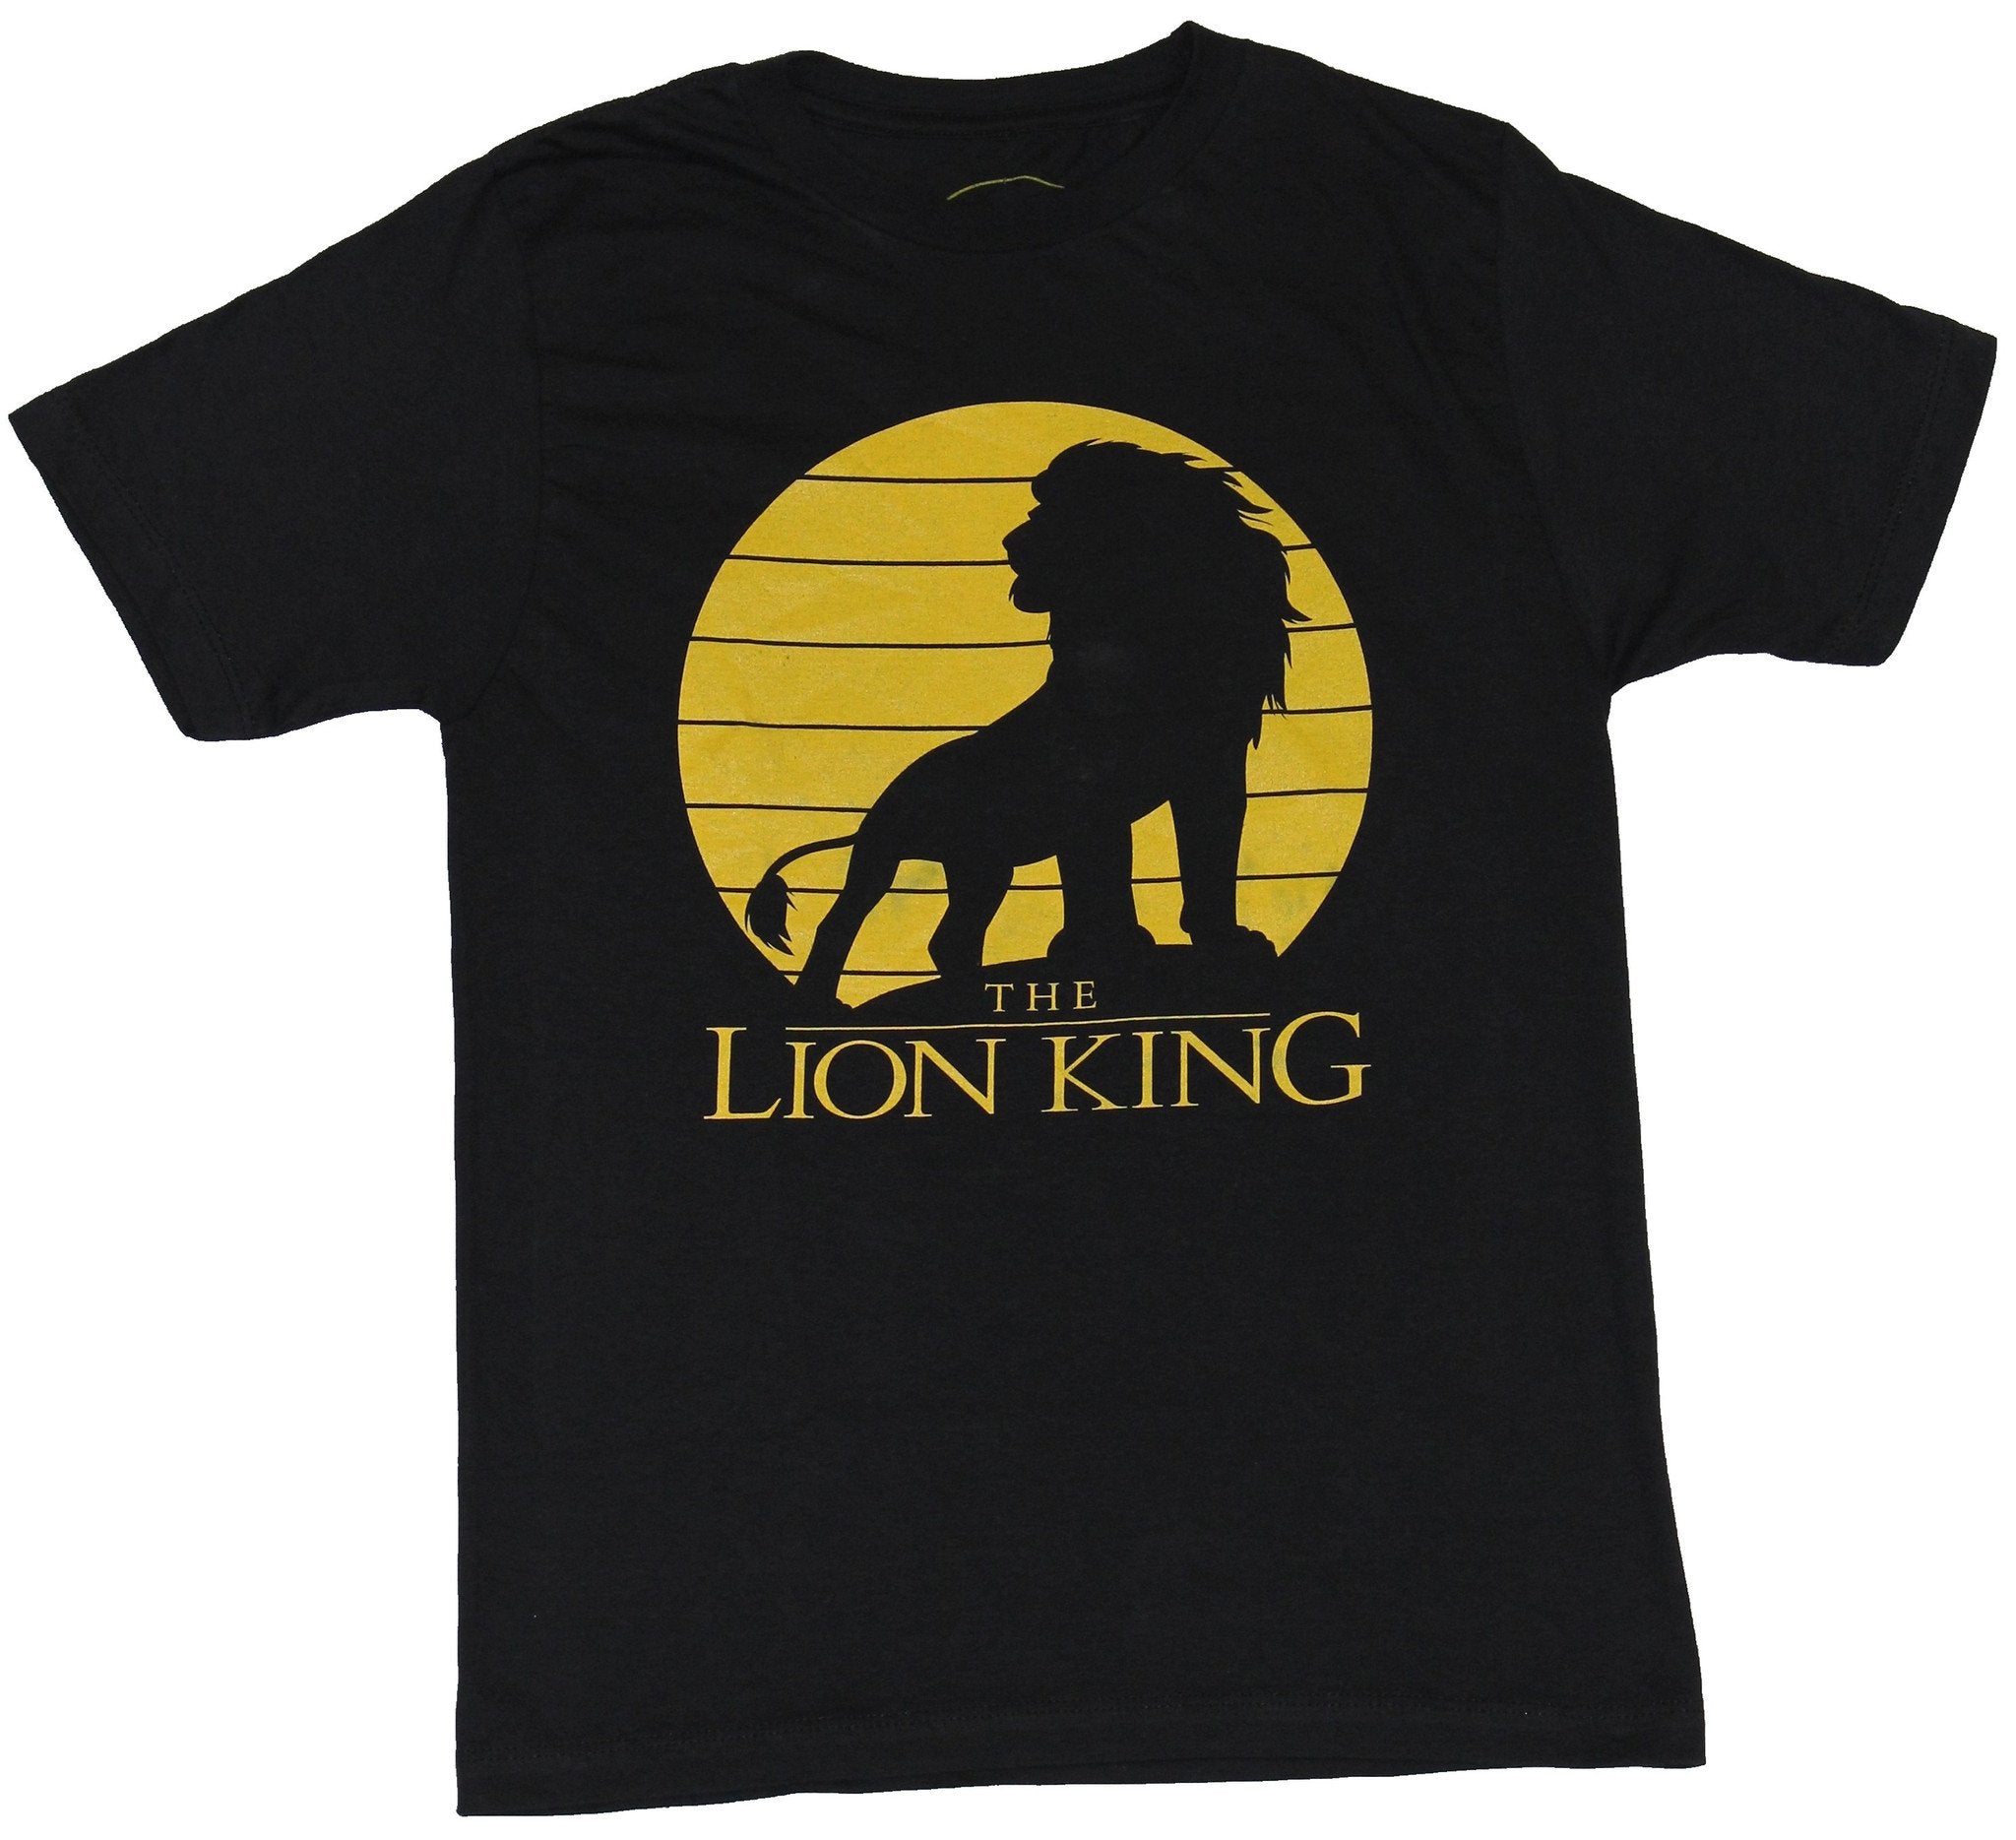 The Lion King Mens T-Shirt - Yellow Silhouette King Simba Image